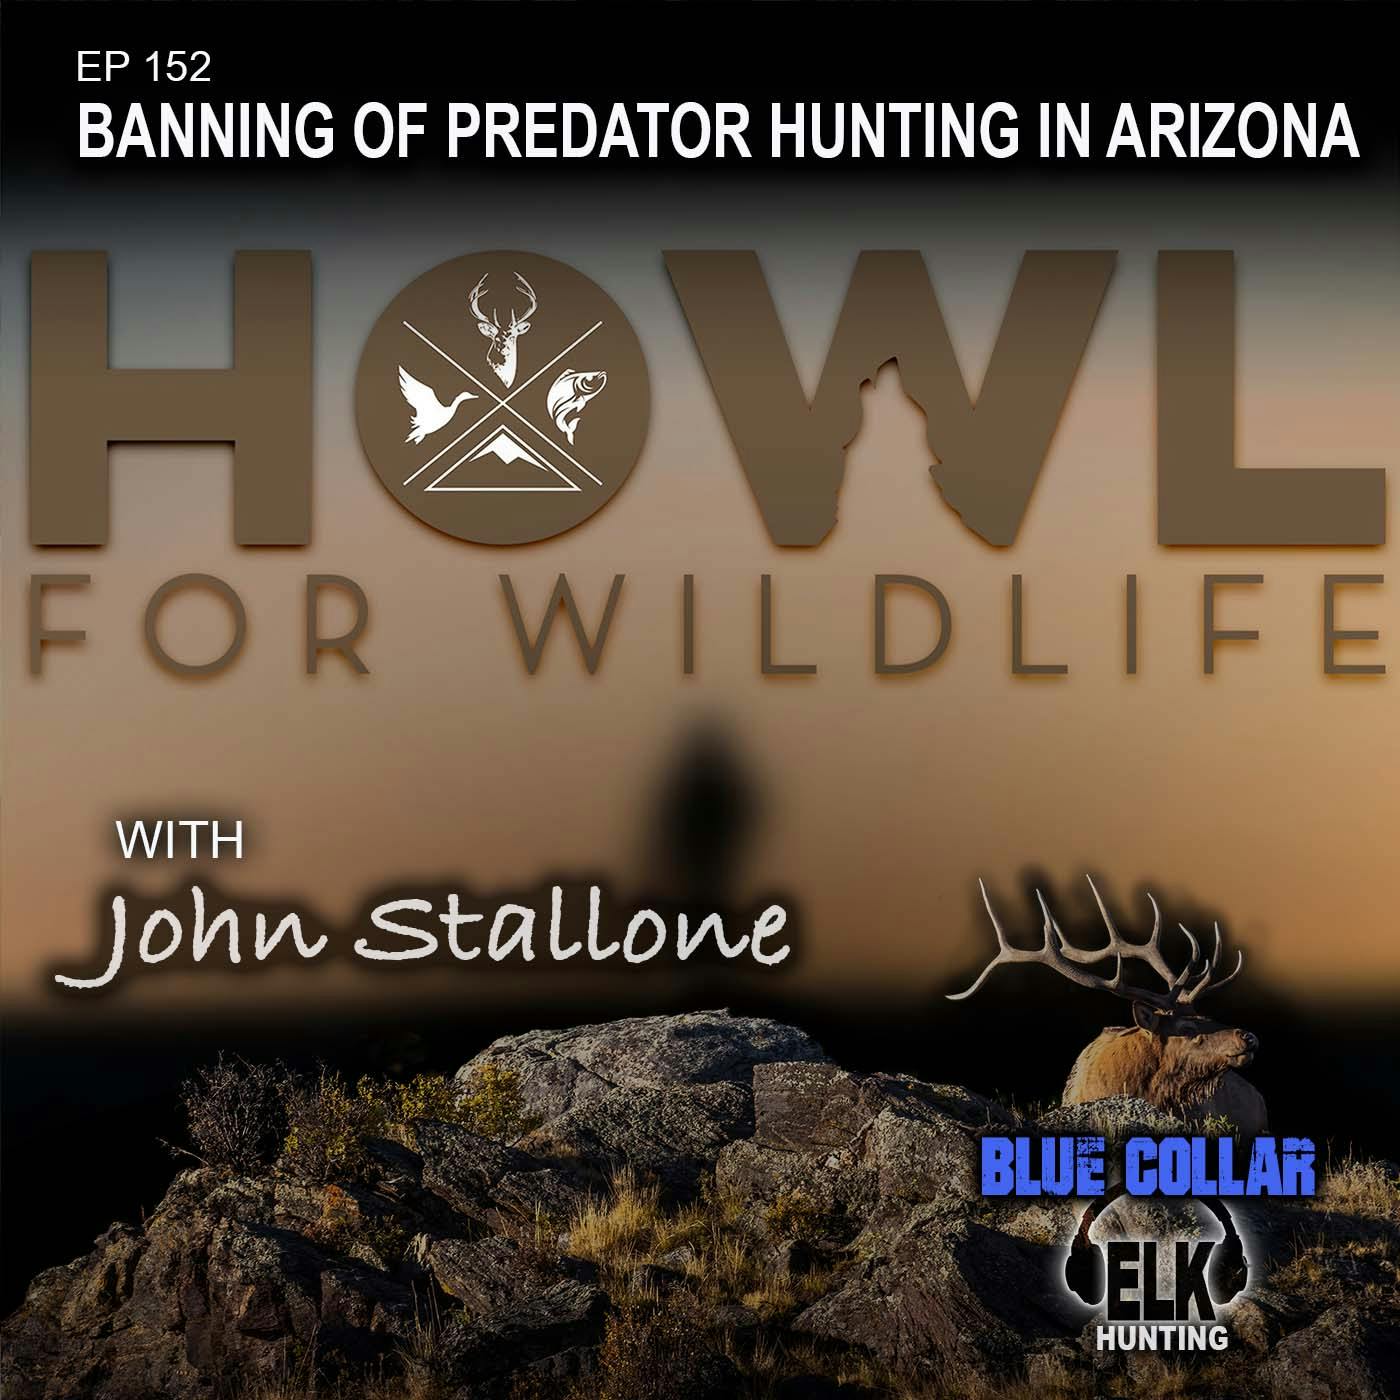 EP 151: Mountain Lion, Bobcat Hunting In Arizona Being Threatened.